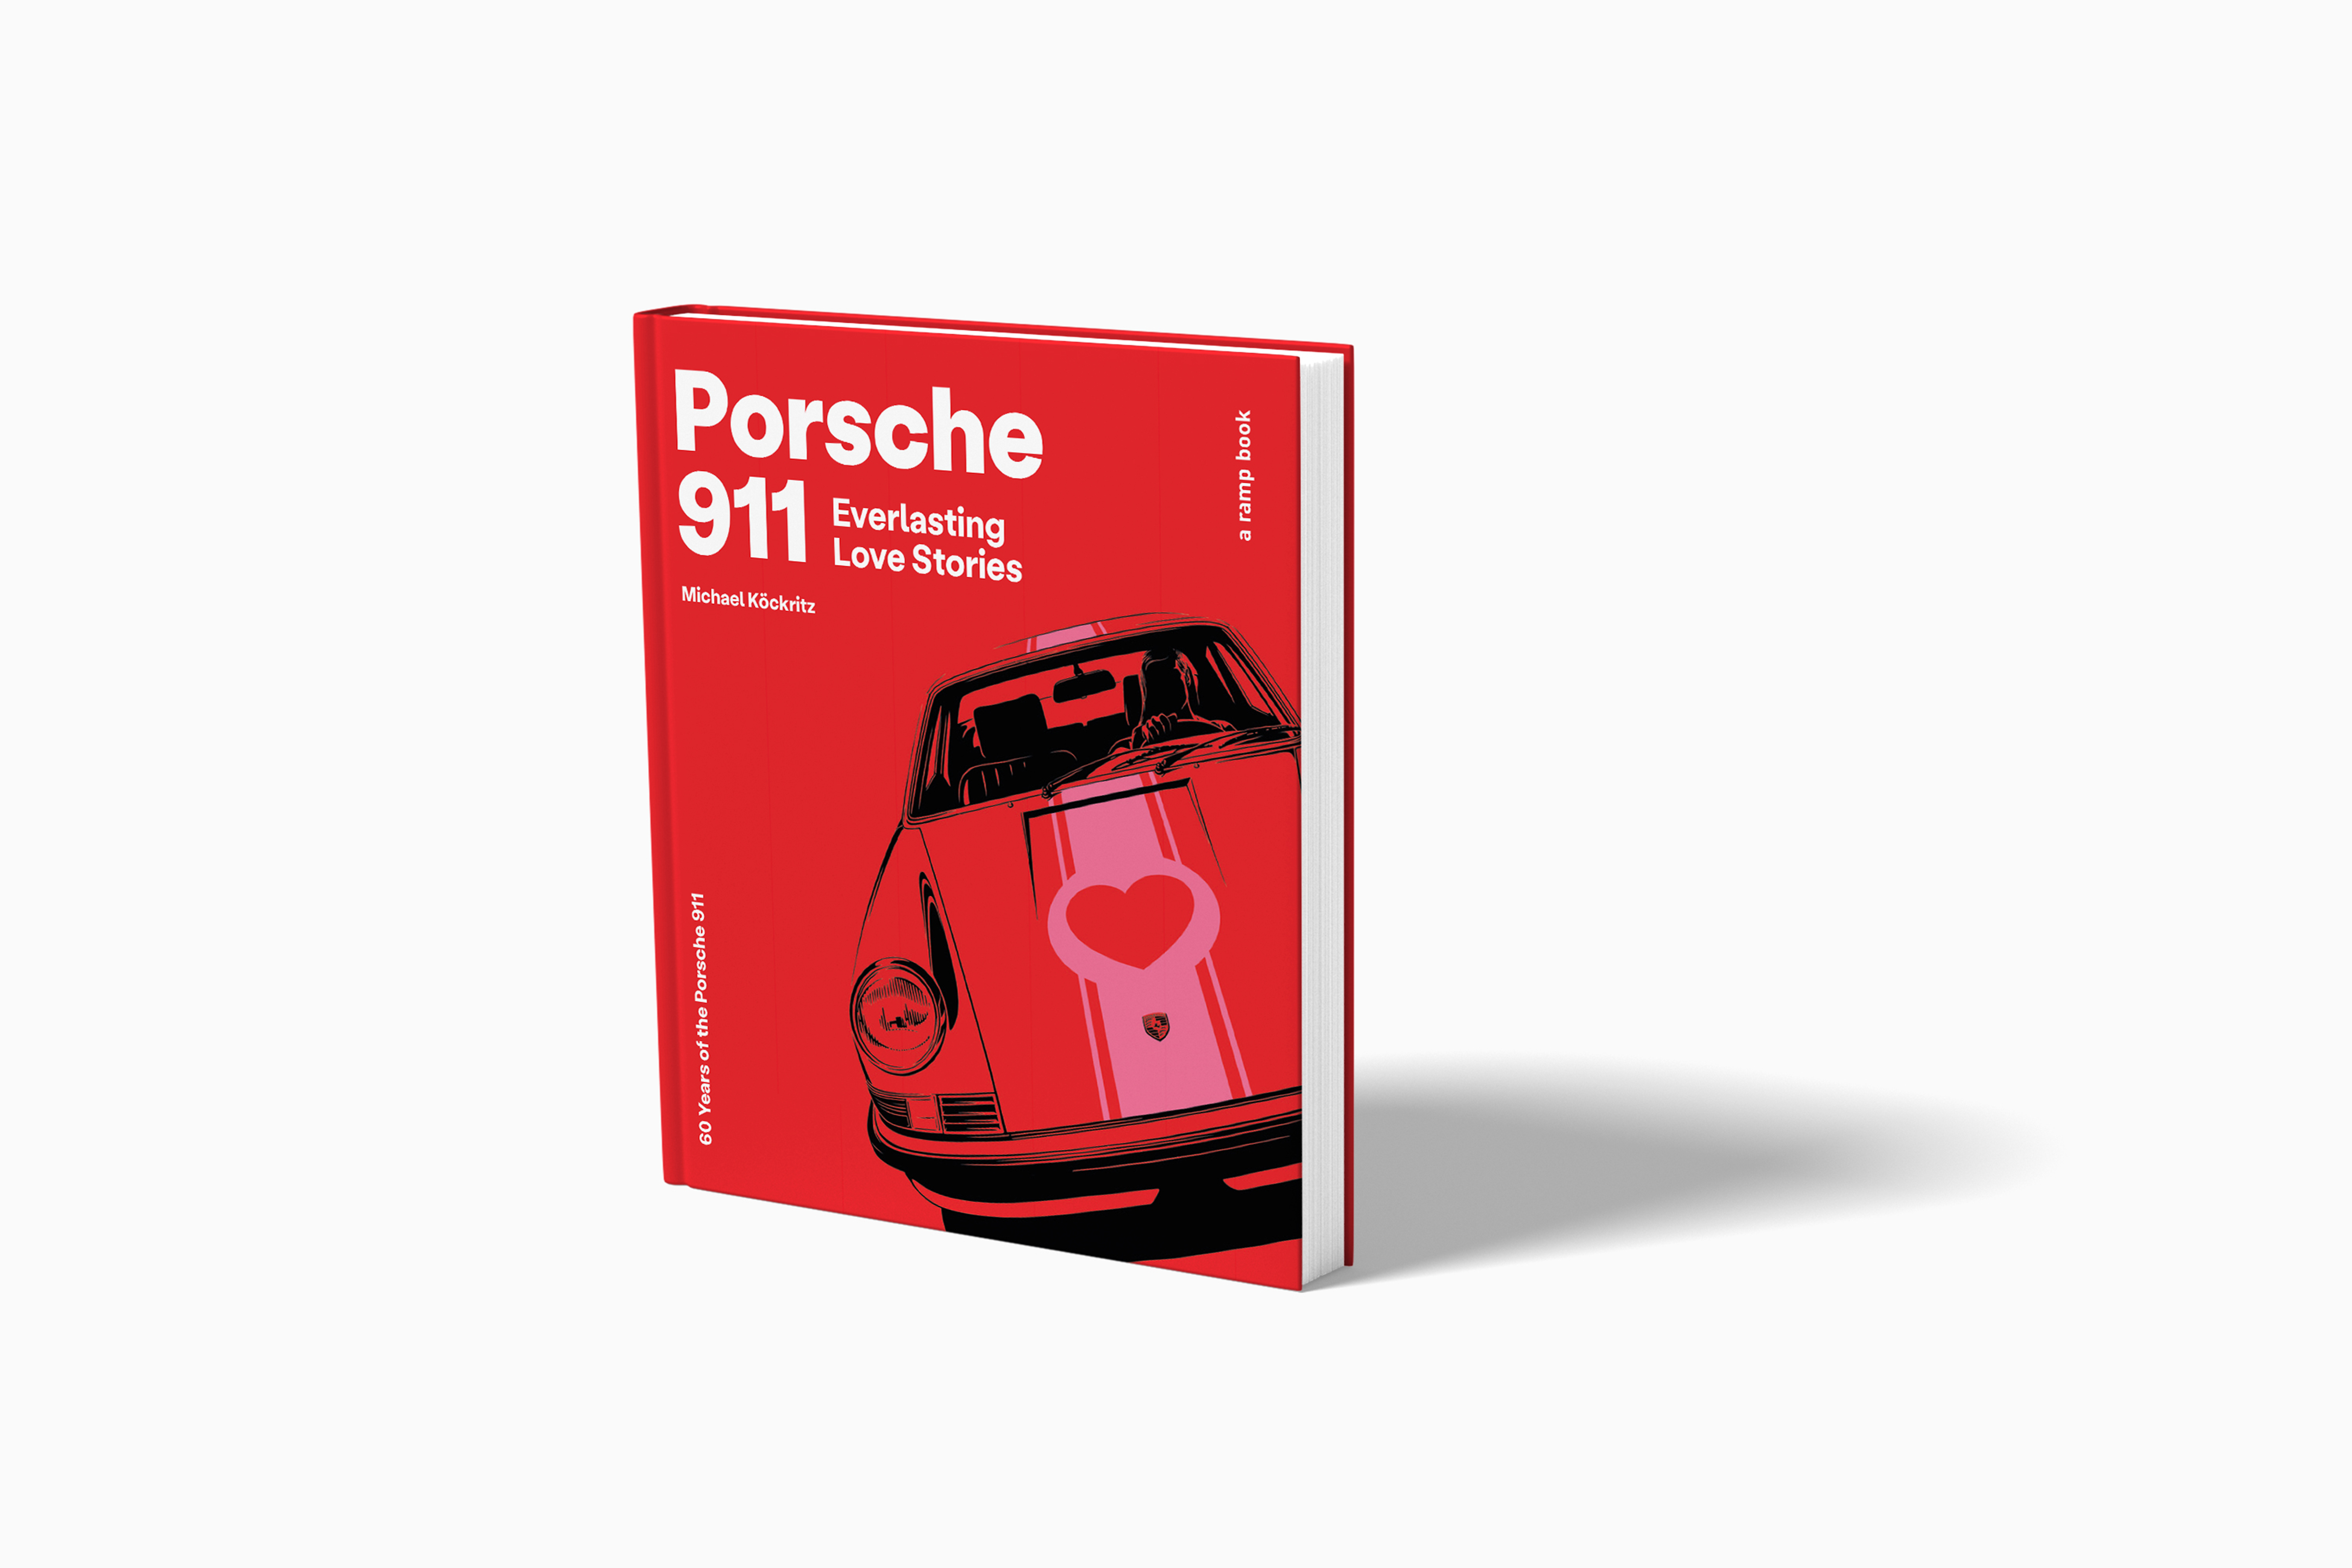 Porsche 911: Everlasting Love Stories book sleeve artwork